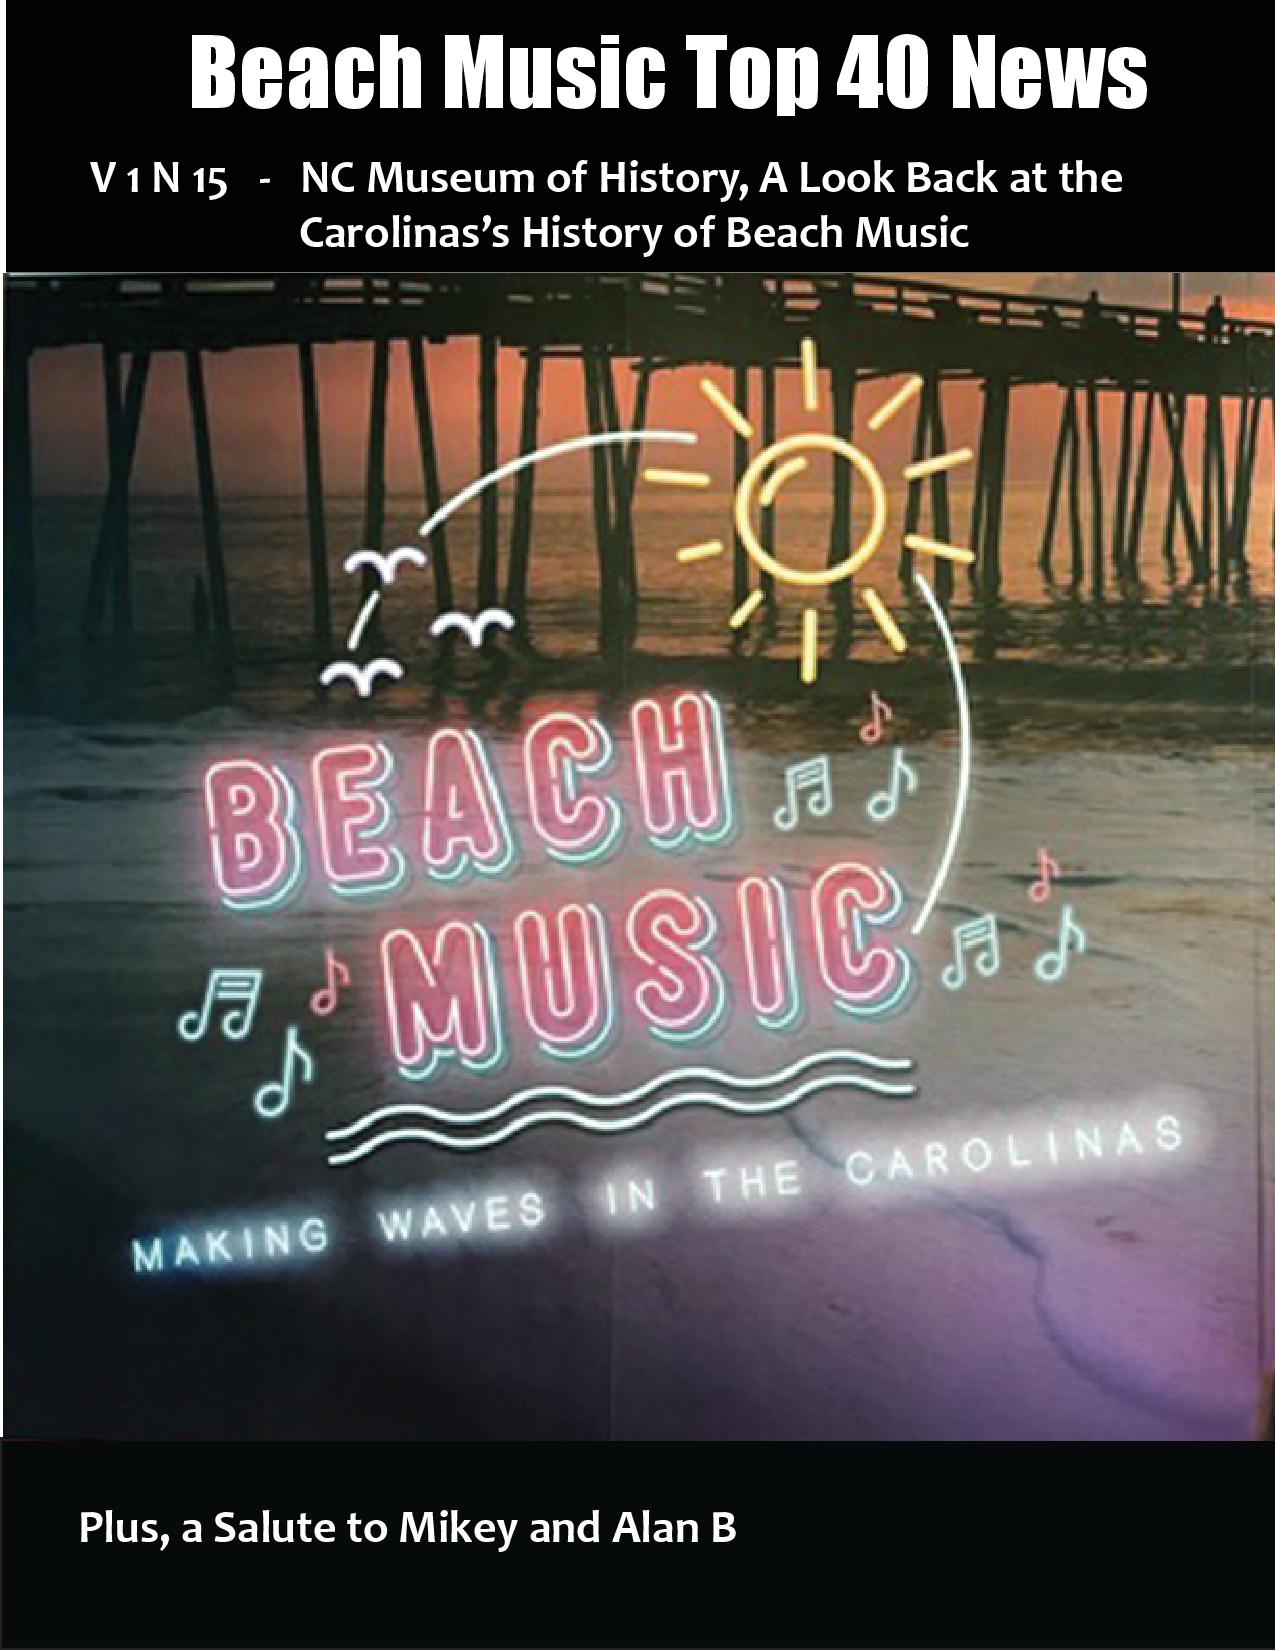 Beach Music Top 40 News V1 N15 coverindd